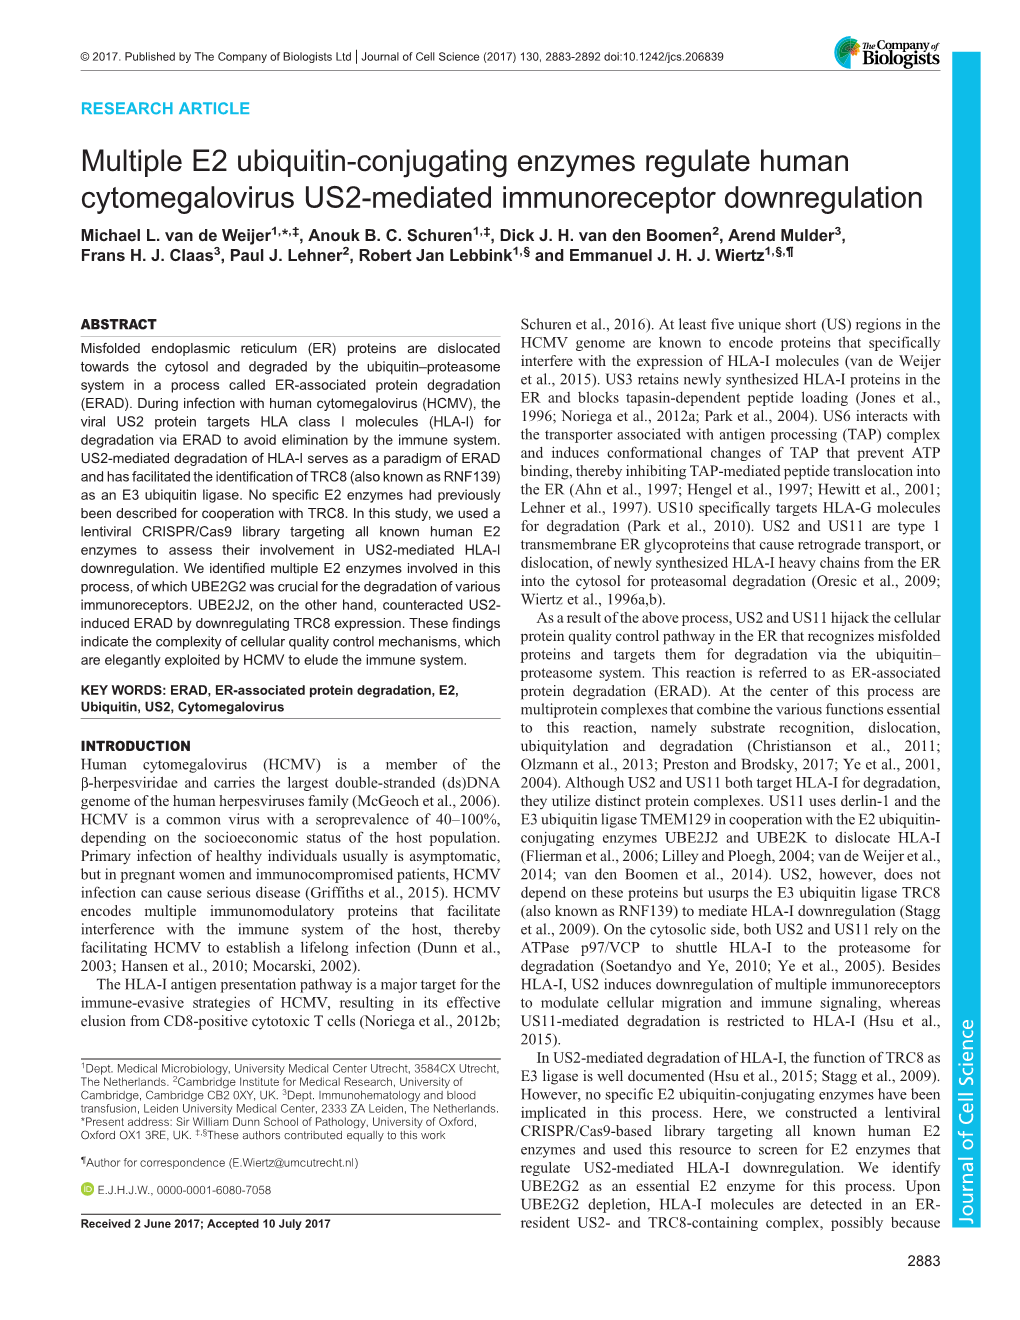 Multiple E2 Ubiquitin-Conjugating Enzymes Regulate Human Cytomegalovirus US2-Mediated Immunoreceptor Downregulation Michael L